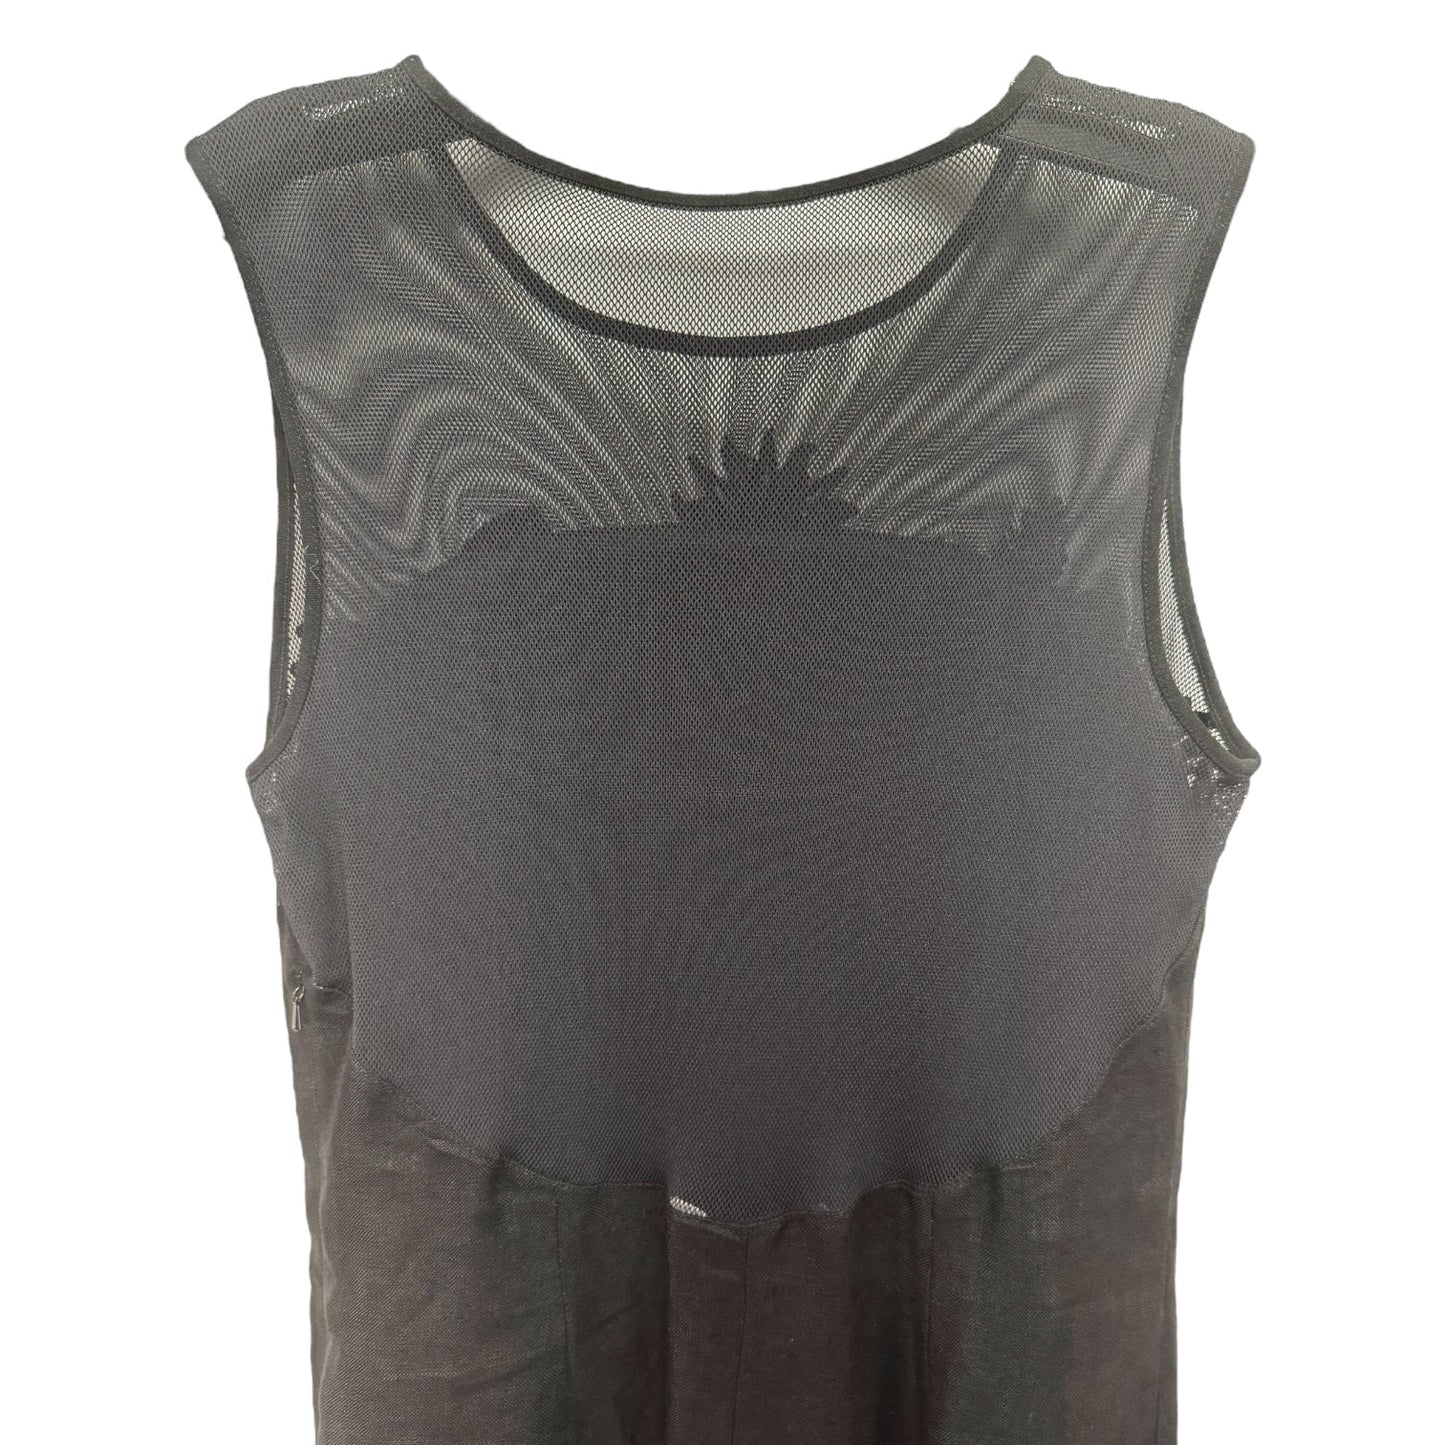 Linen & Mesh Black Maxi Dress Adrienne Vittadini, Size 8